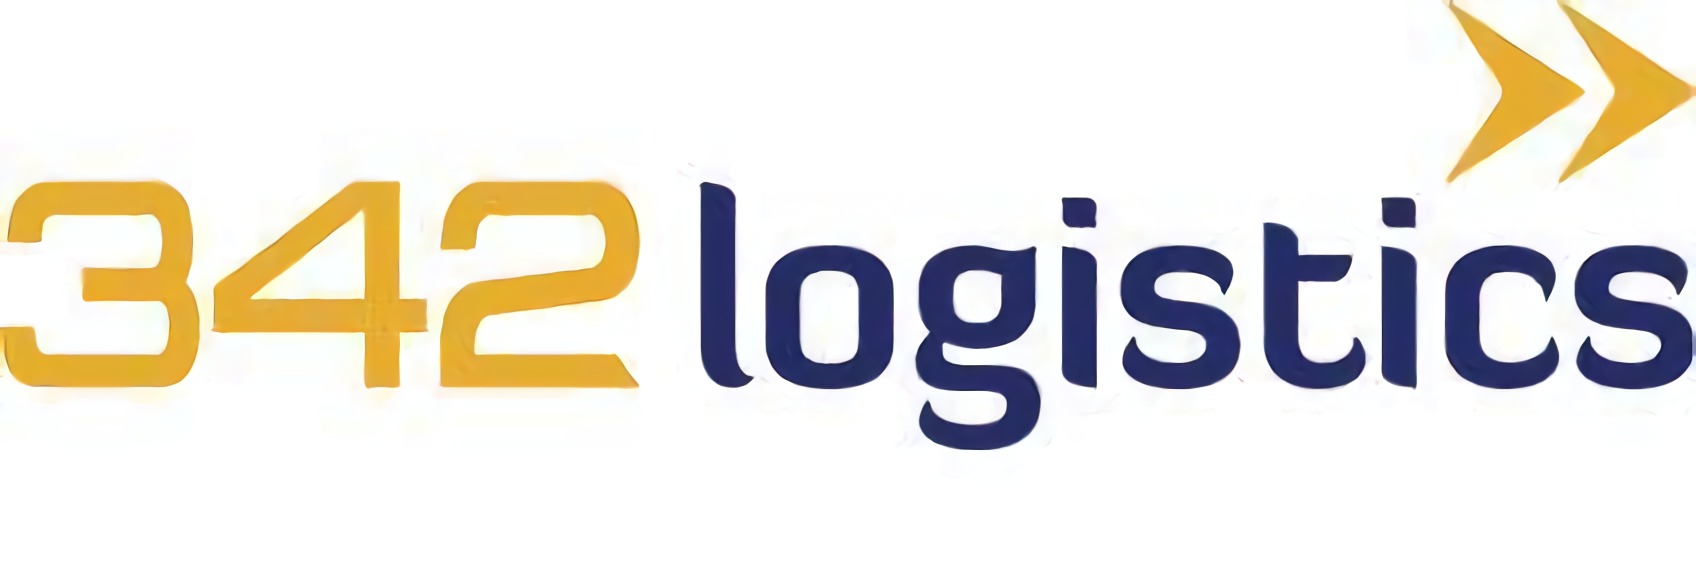 342 logistics logo (2)